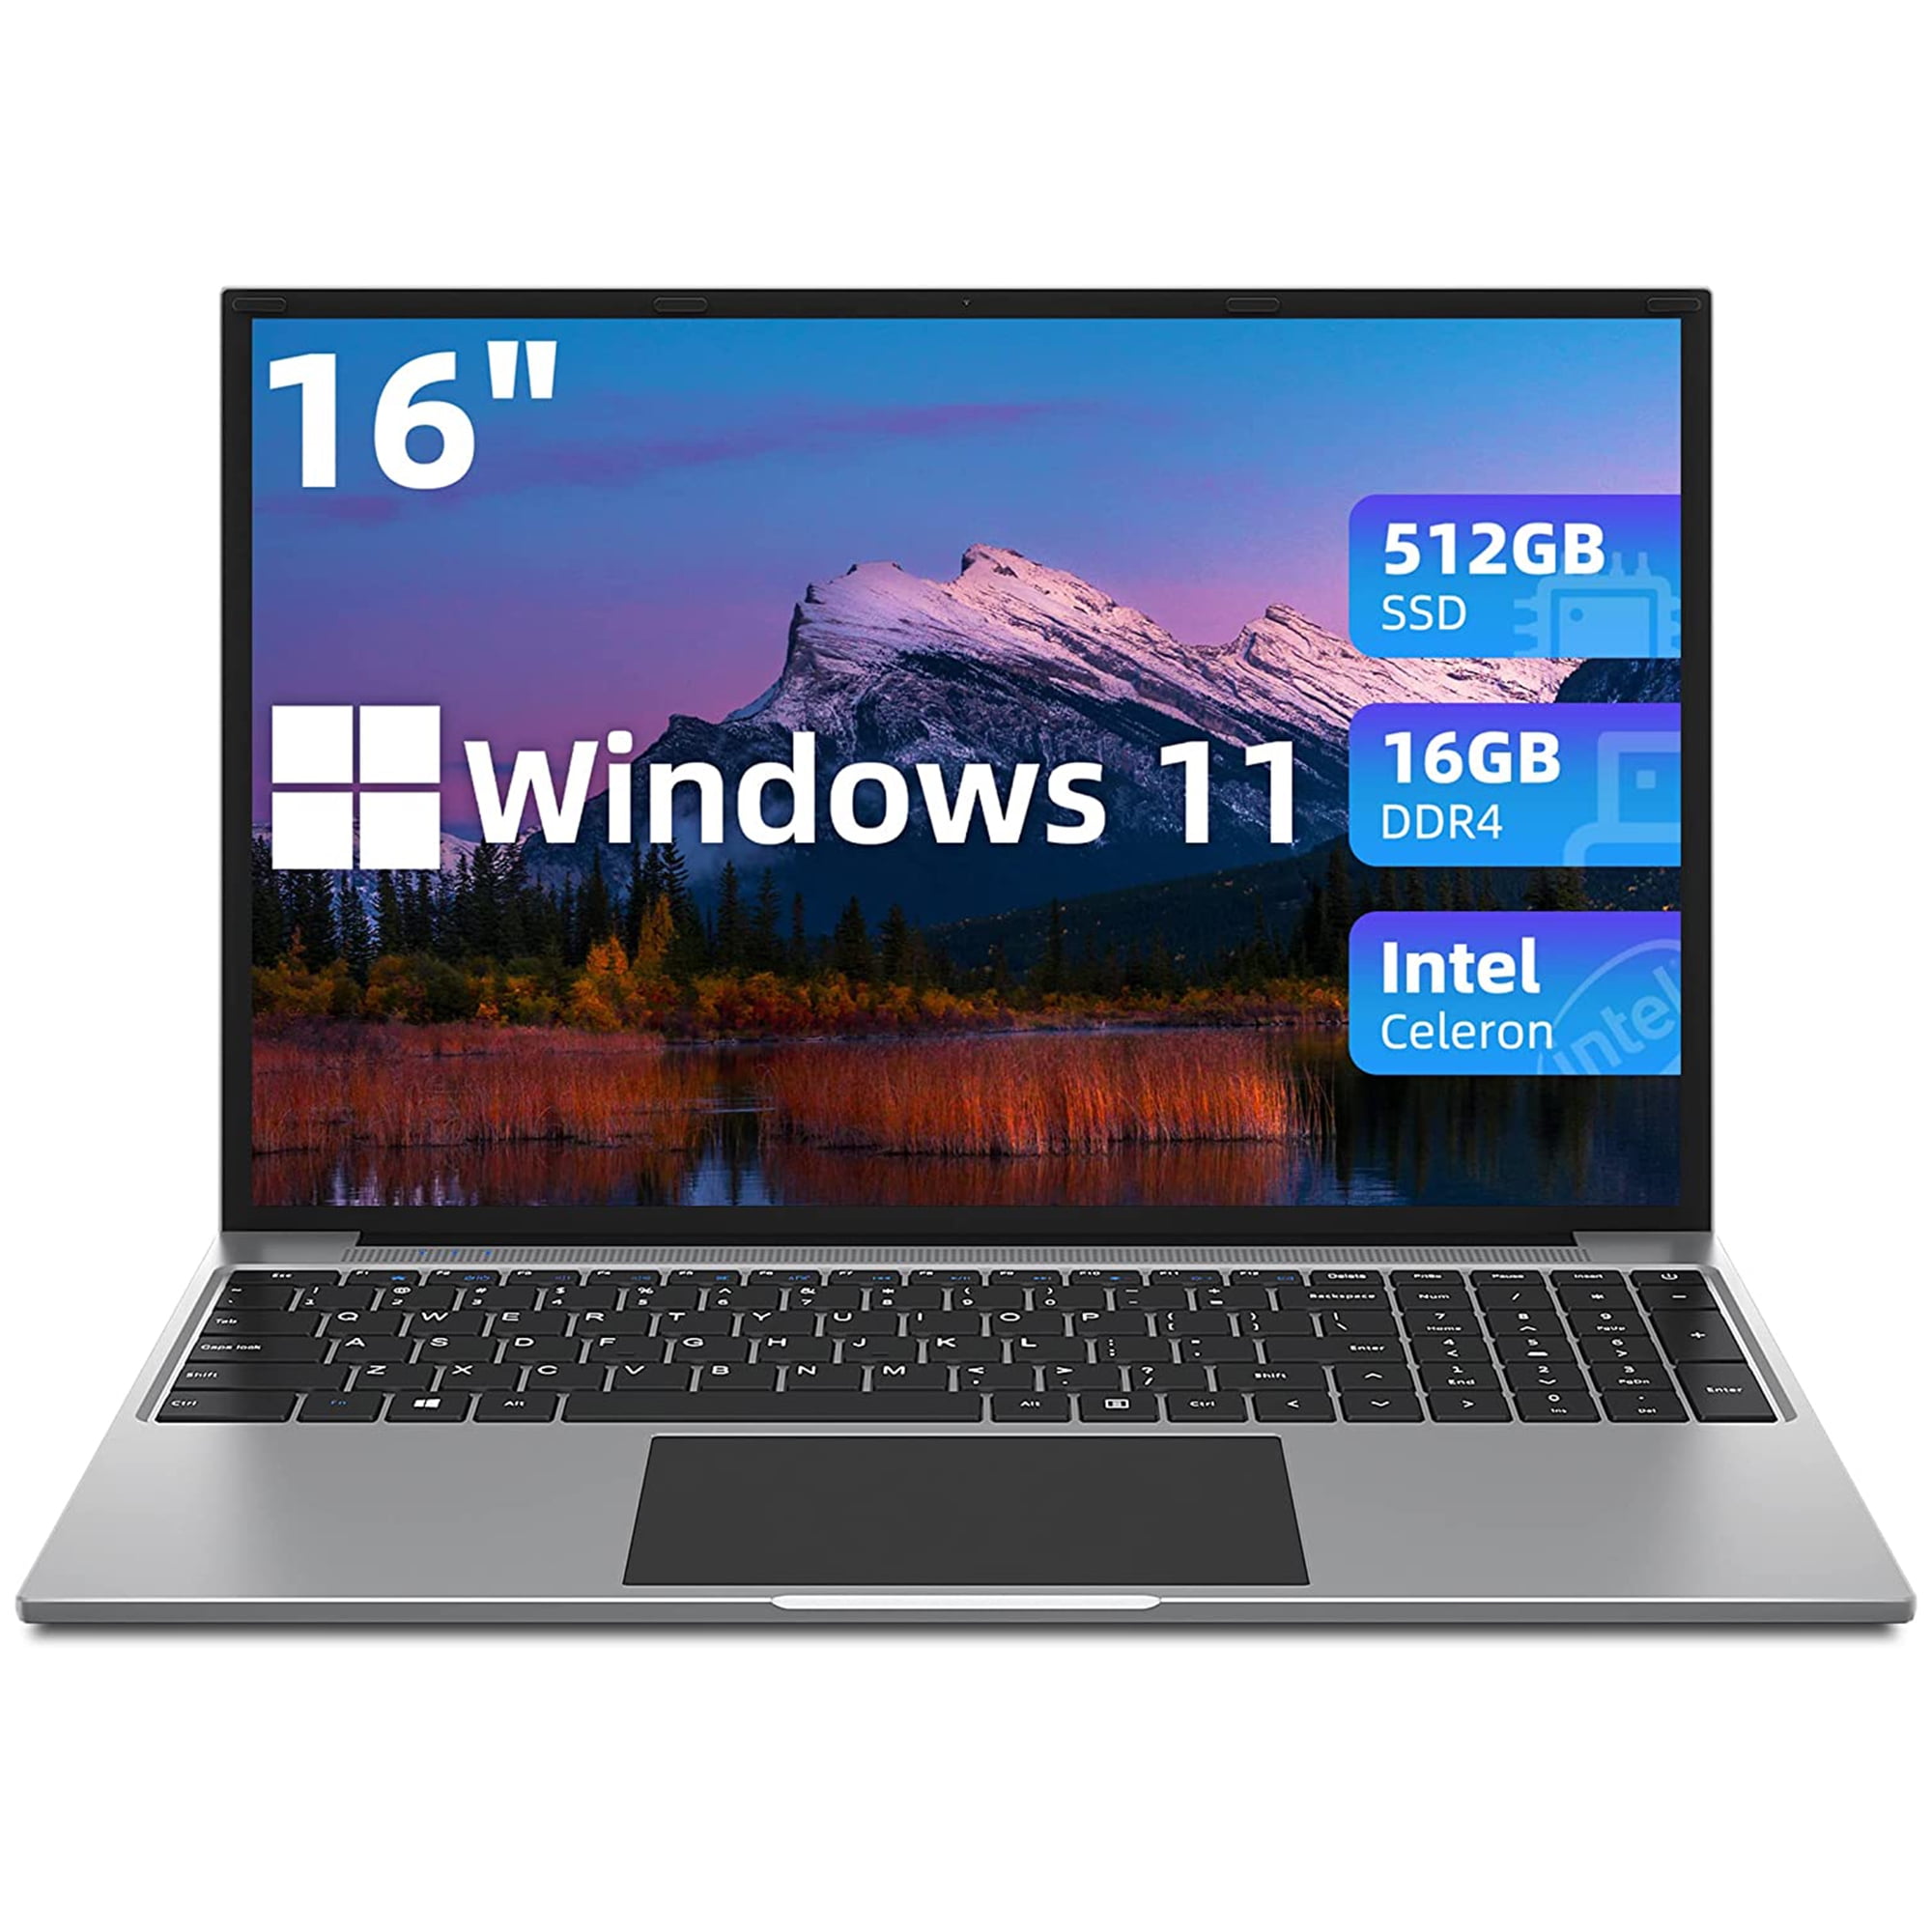 16 GB Laptop Computers